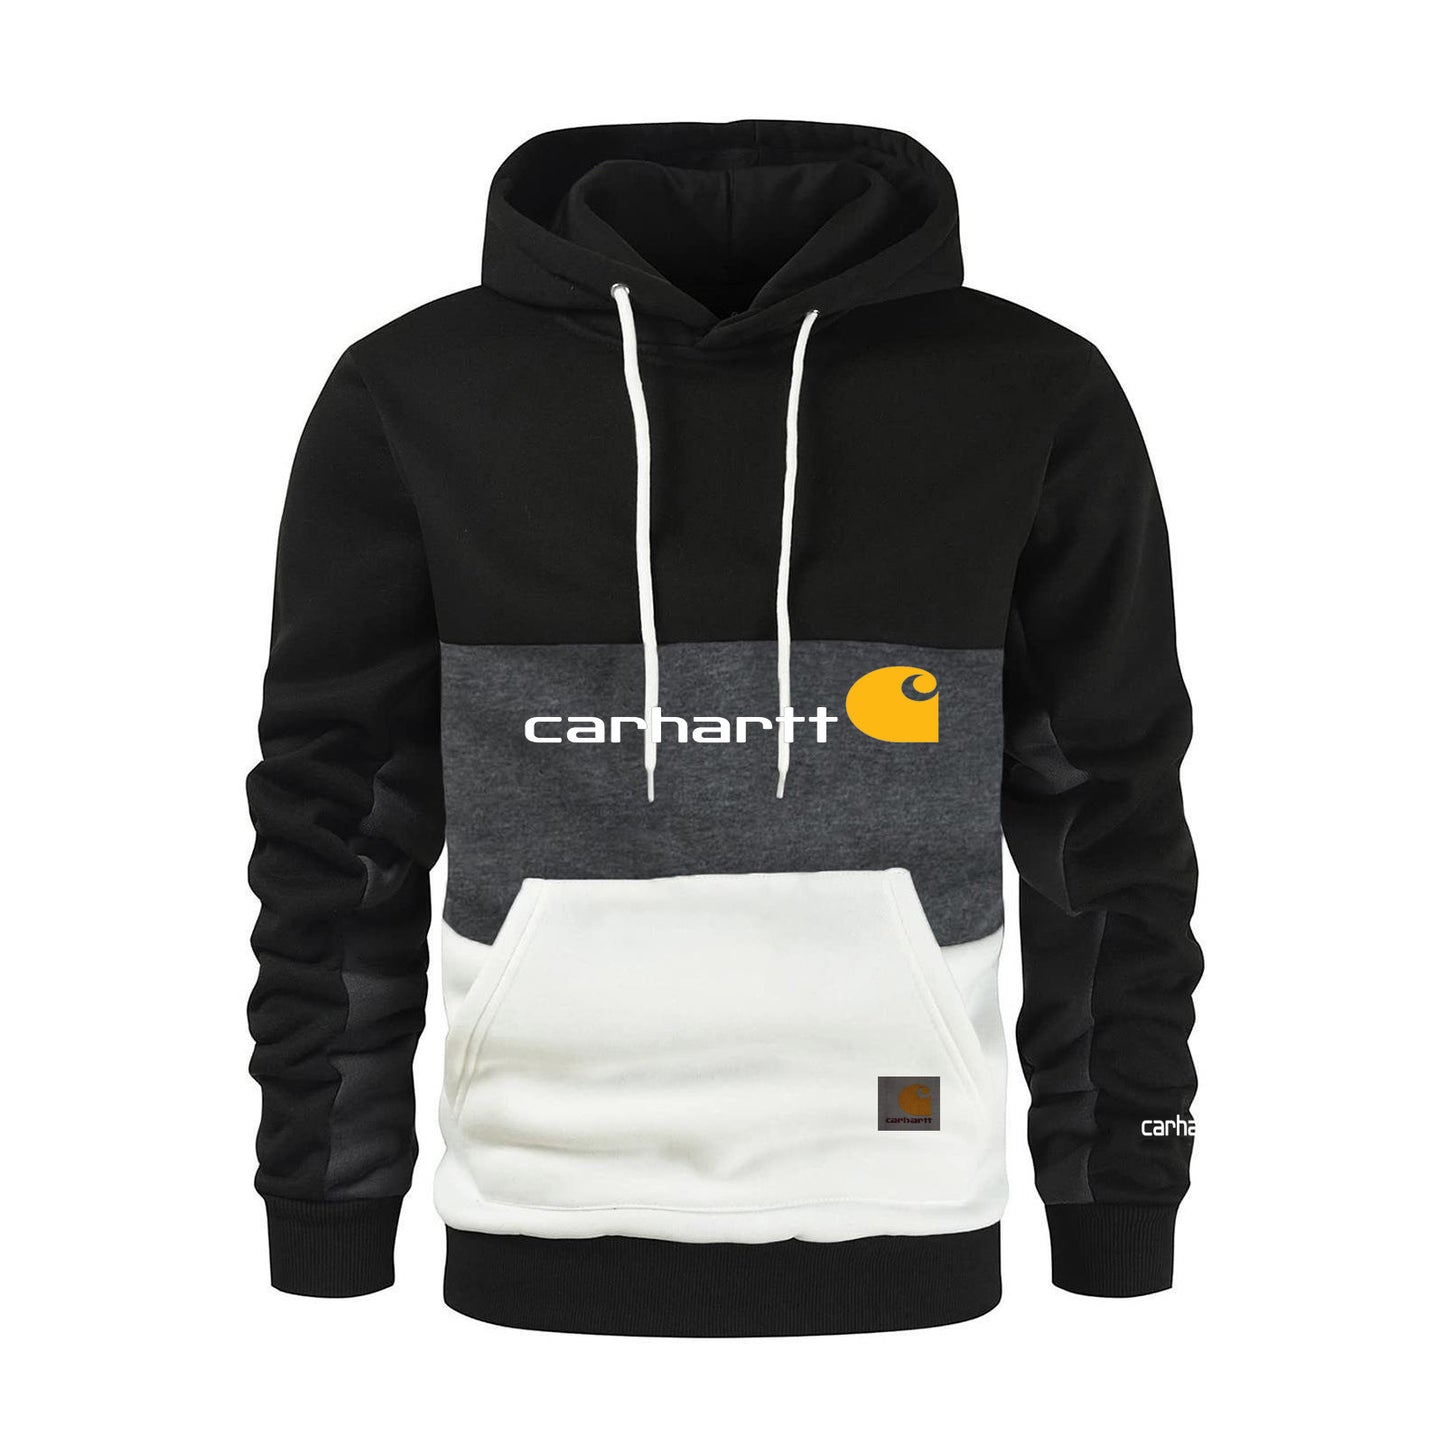 Carhartt Unisex Patchwork Hoodie Casual Sweater